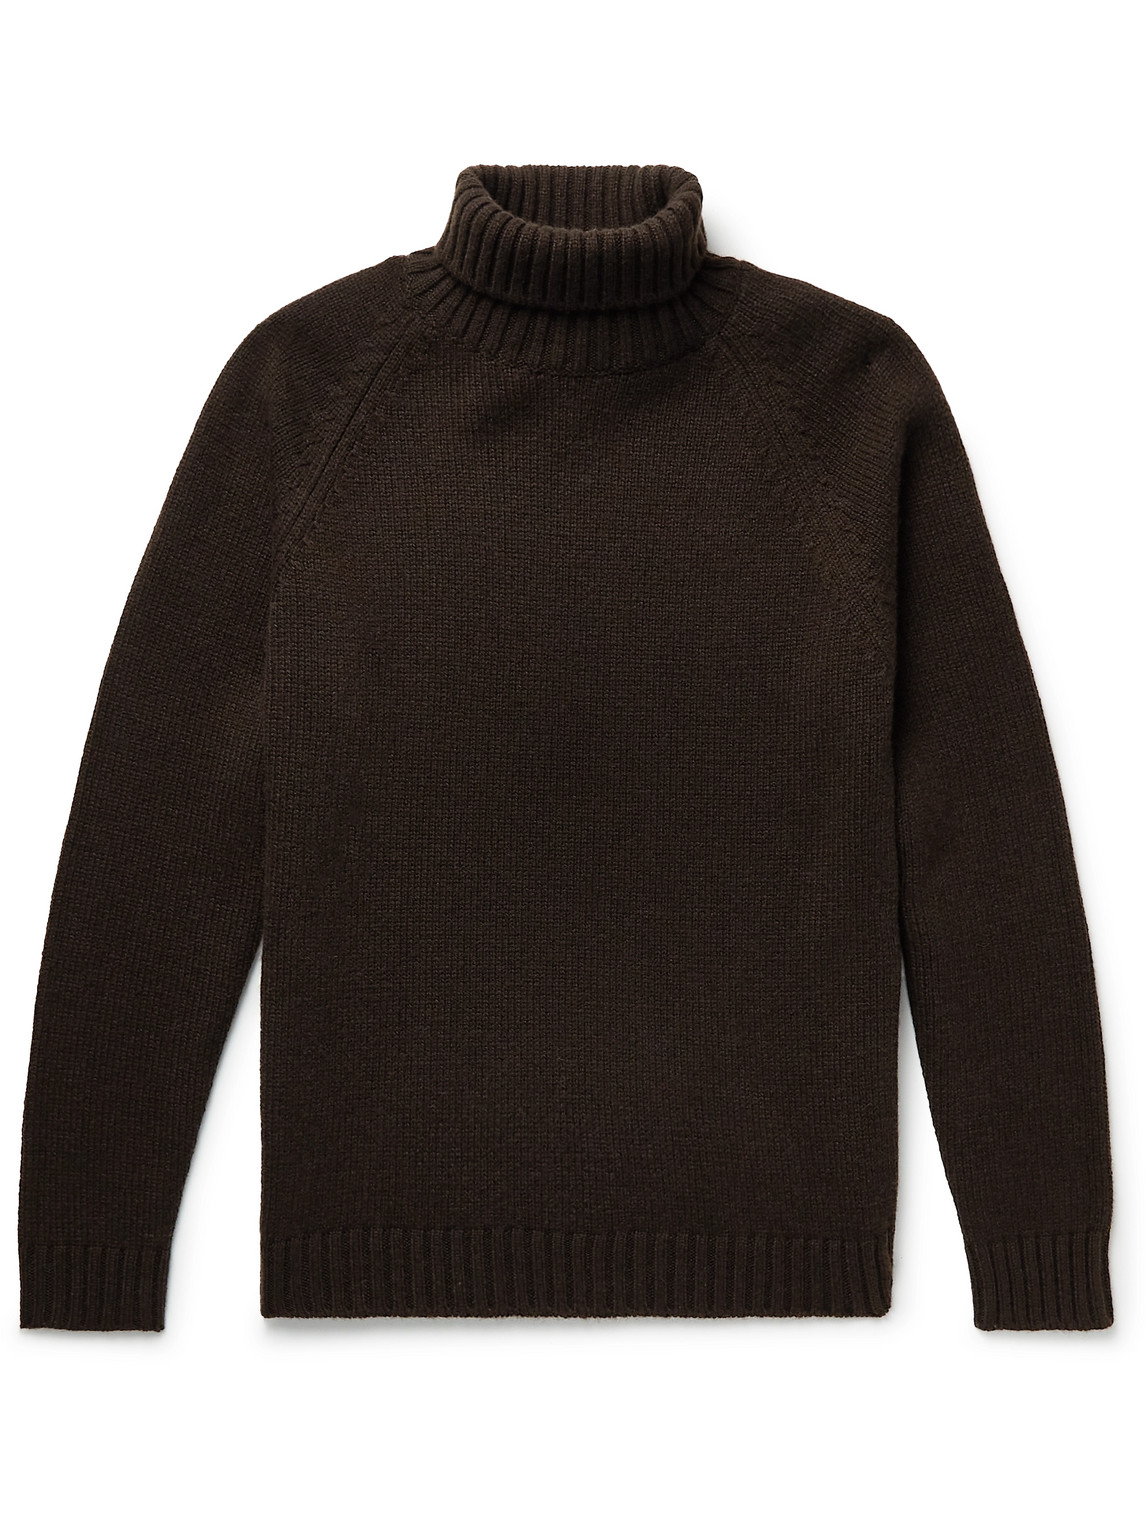 Umit Benan B+ Roll-neck Cashmere Sweater In Black